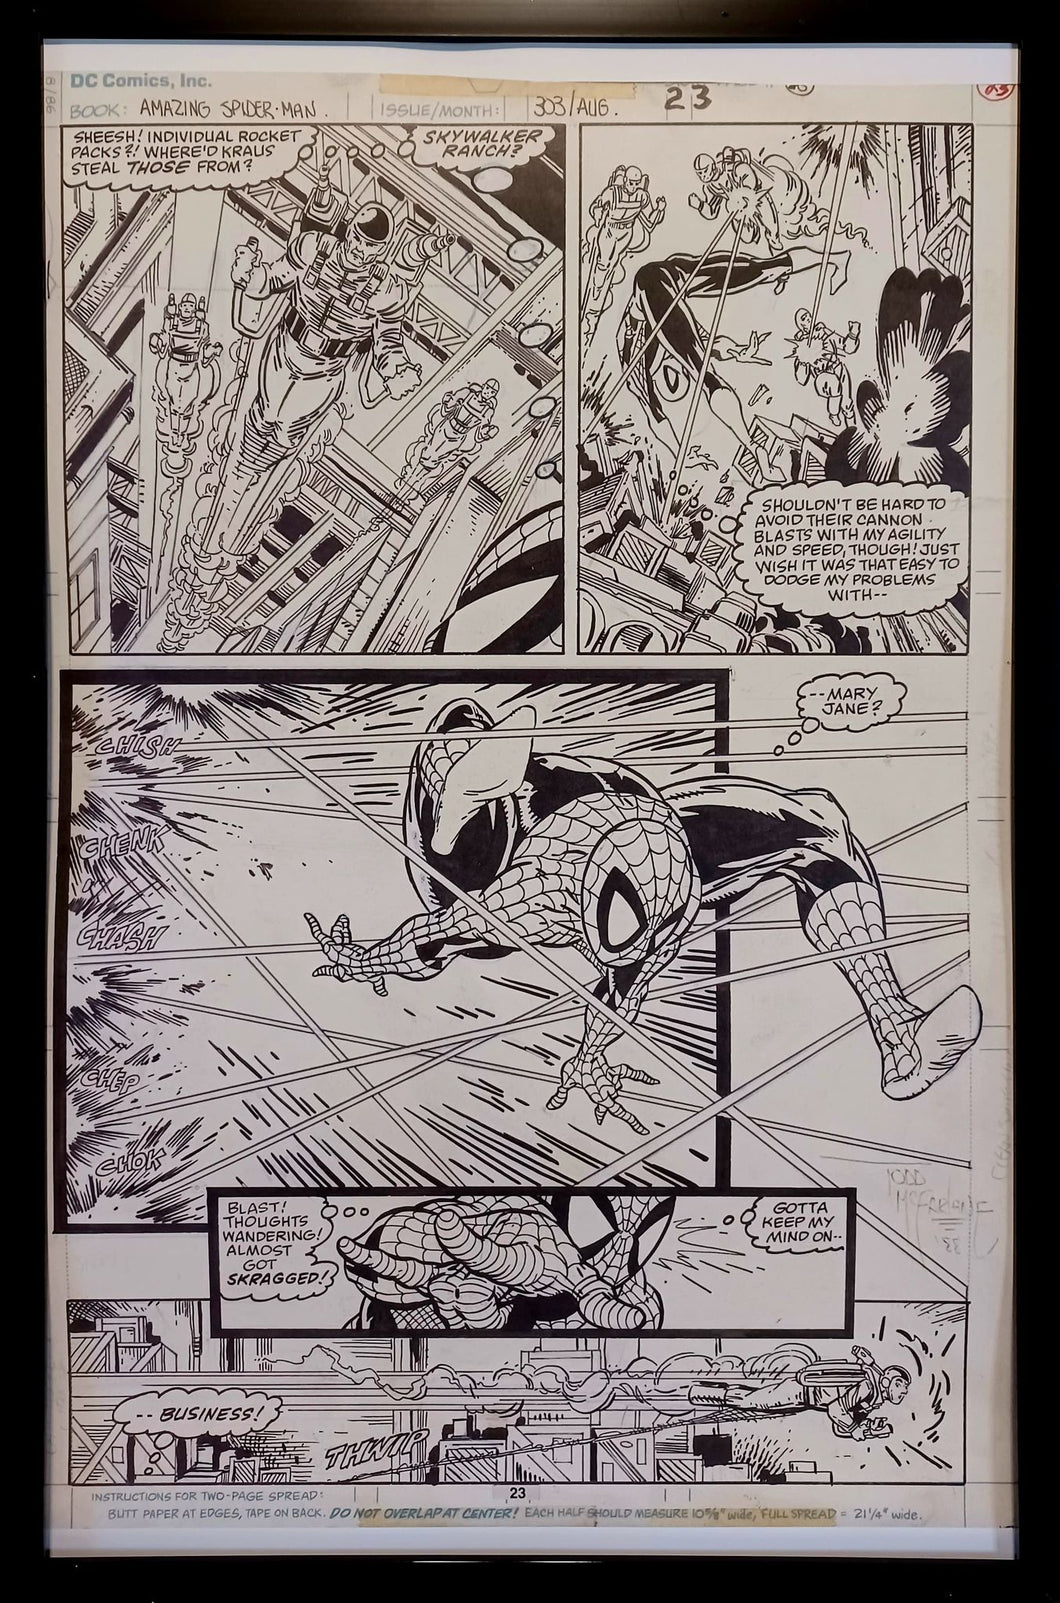 Amazing Spider-Man #303 pg. 17 by Todd McFarlane 11x17 FRAMED Original Art Print Comic Poster